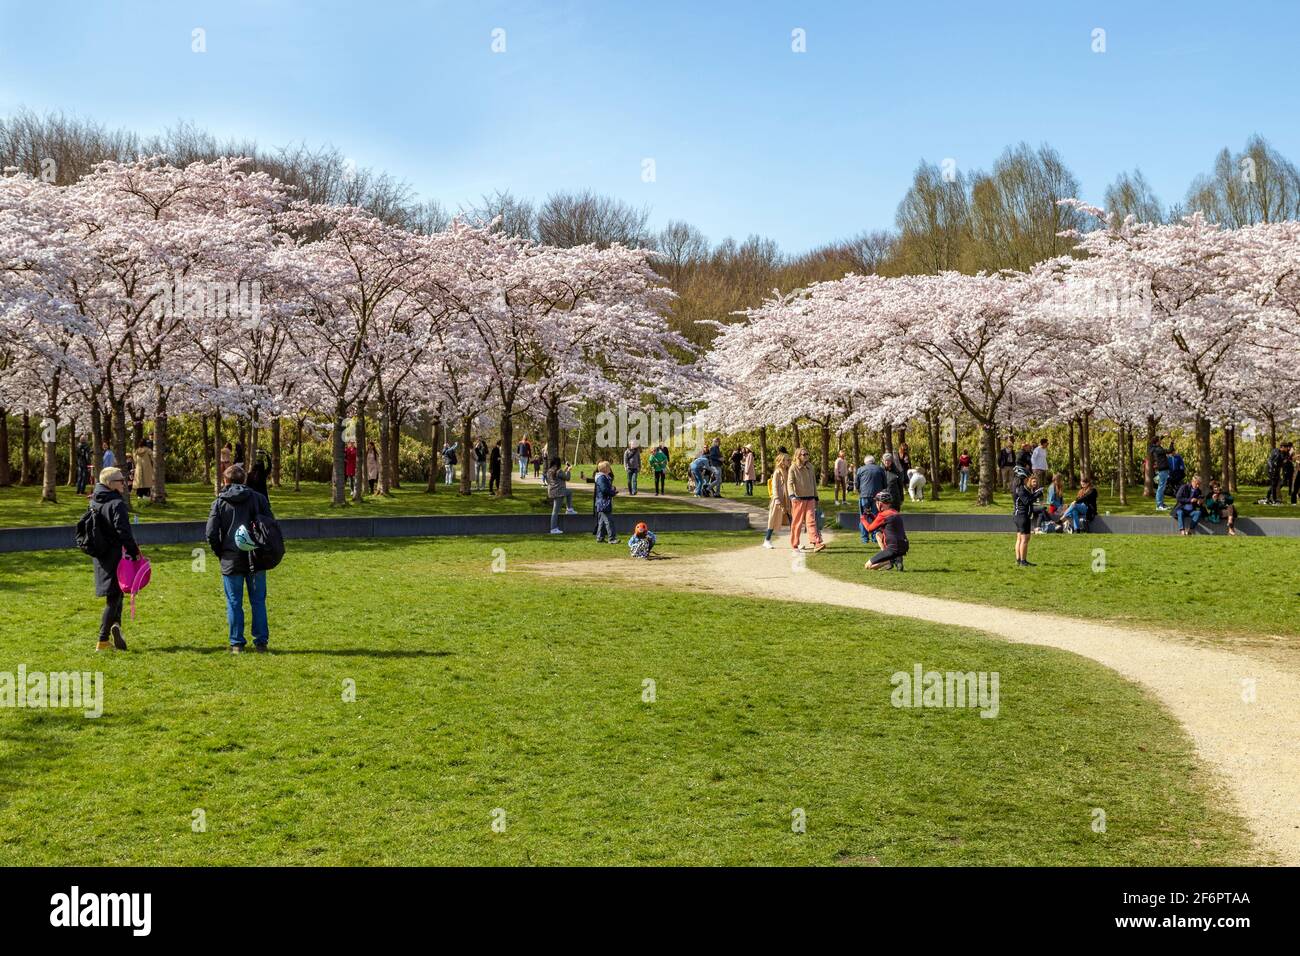 Cherry blossom trees ( Prunus × yedoensis ) in full bloom, Bloesempark, Amsterdamse bos, Amstelveen, North Holland, Netherlands Stock Photo